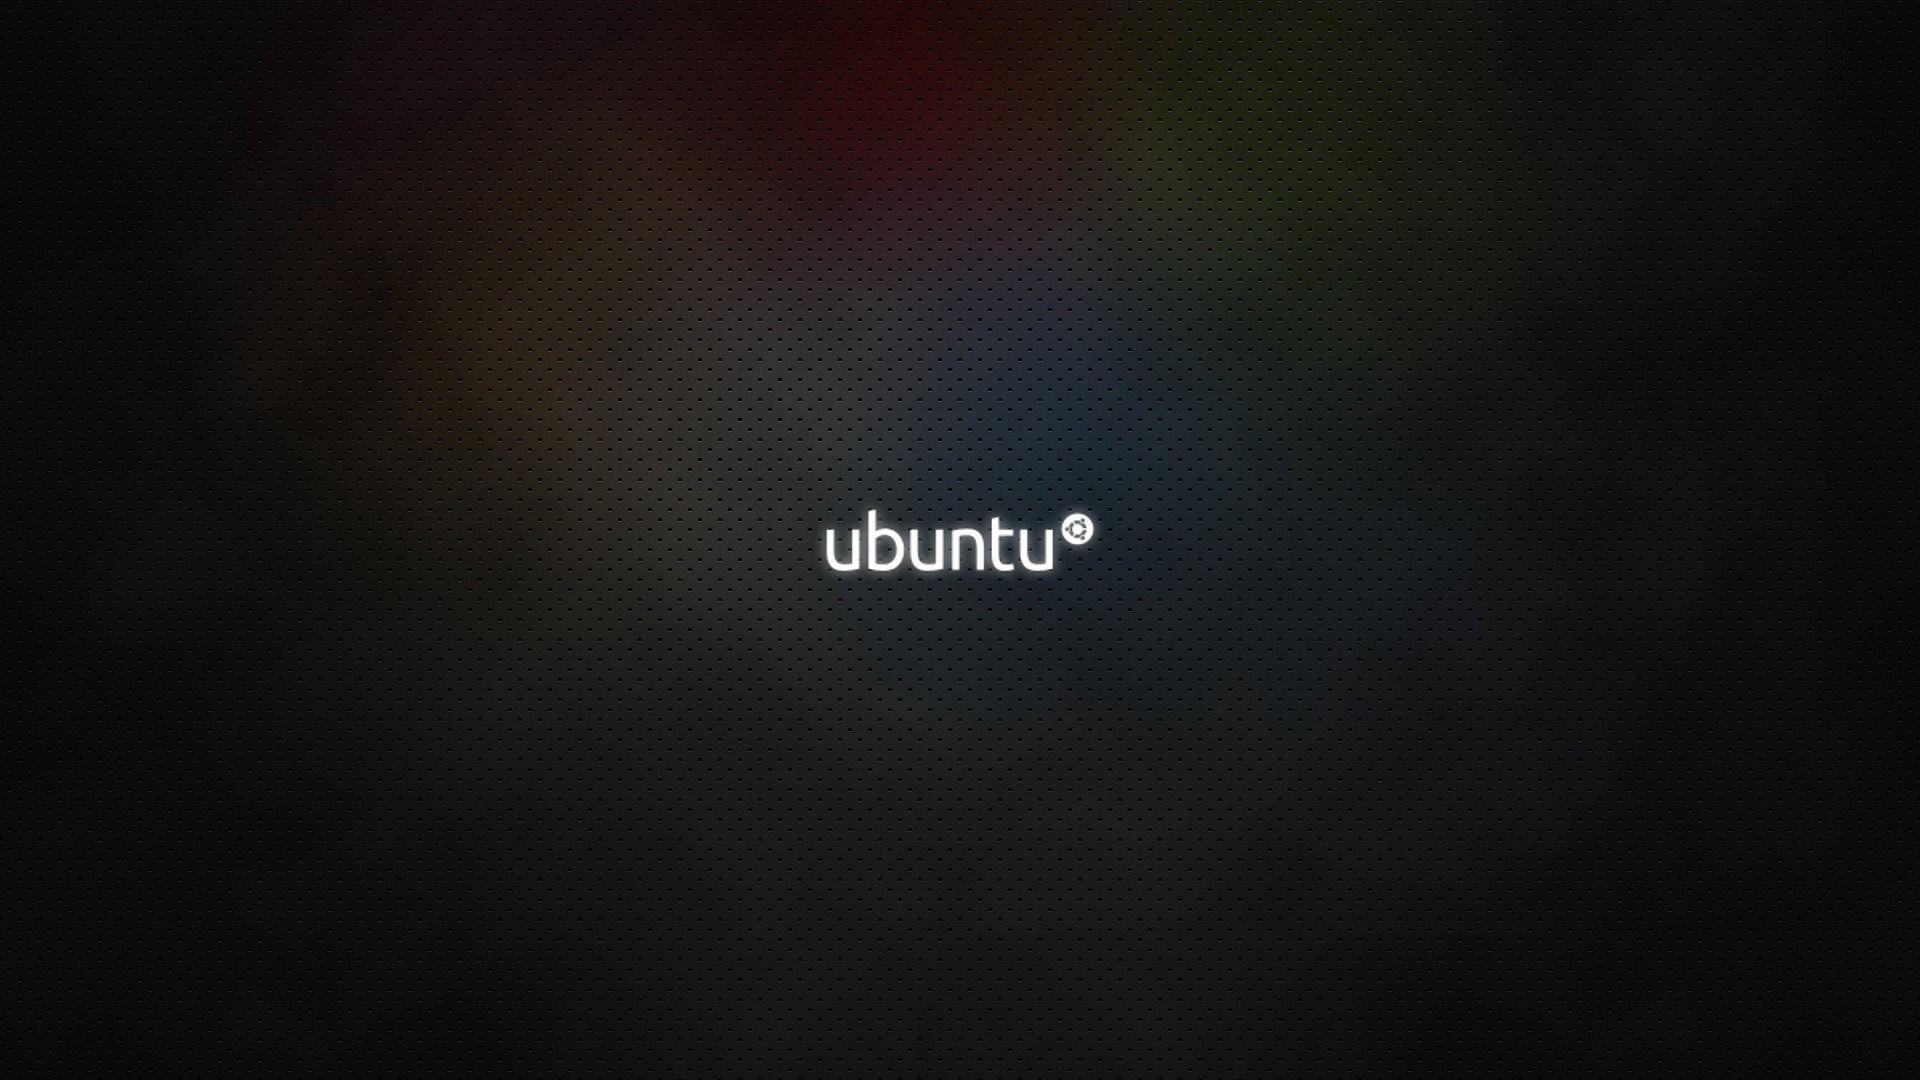 Ubuntu Linux System Desktop Background Wallpaper